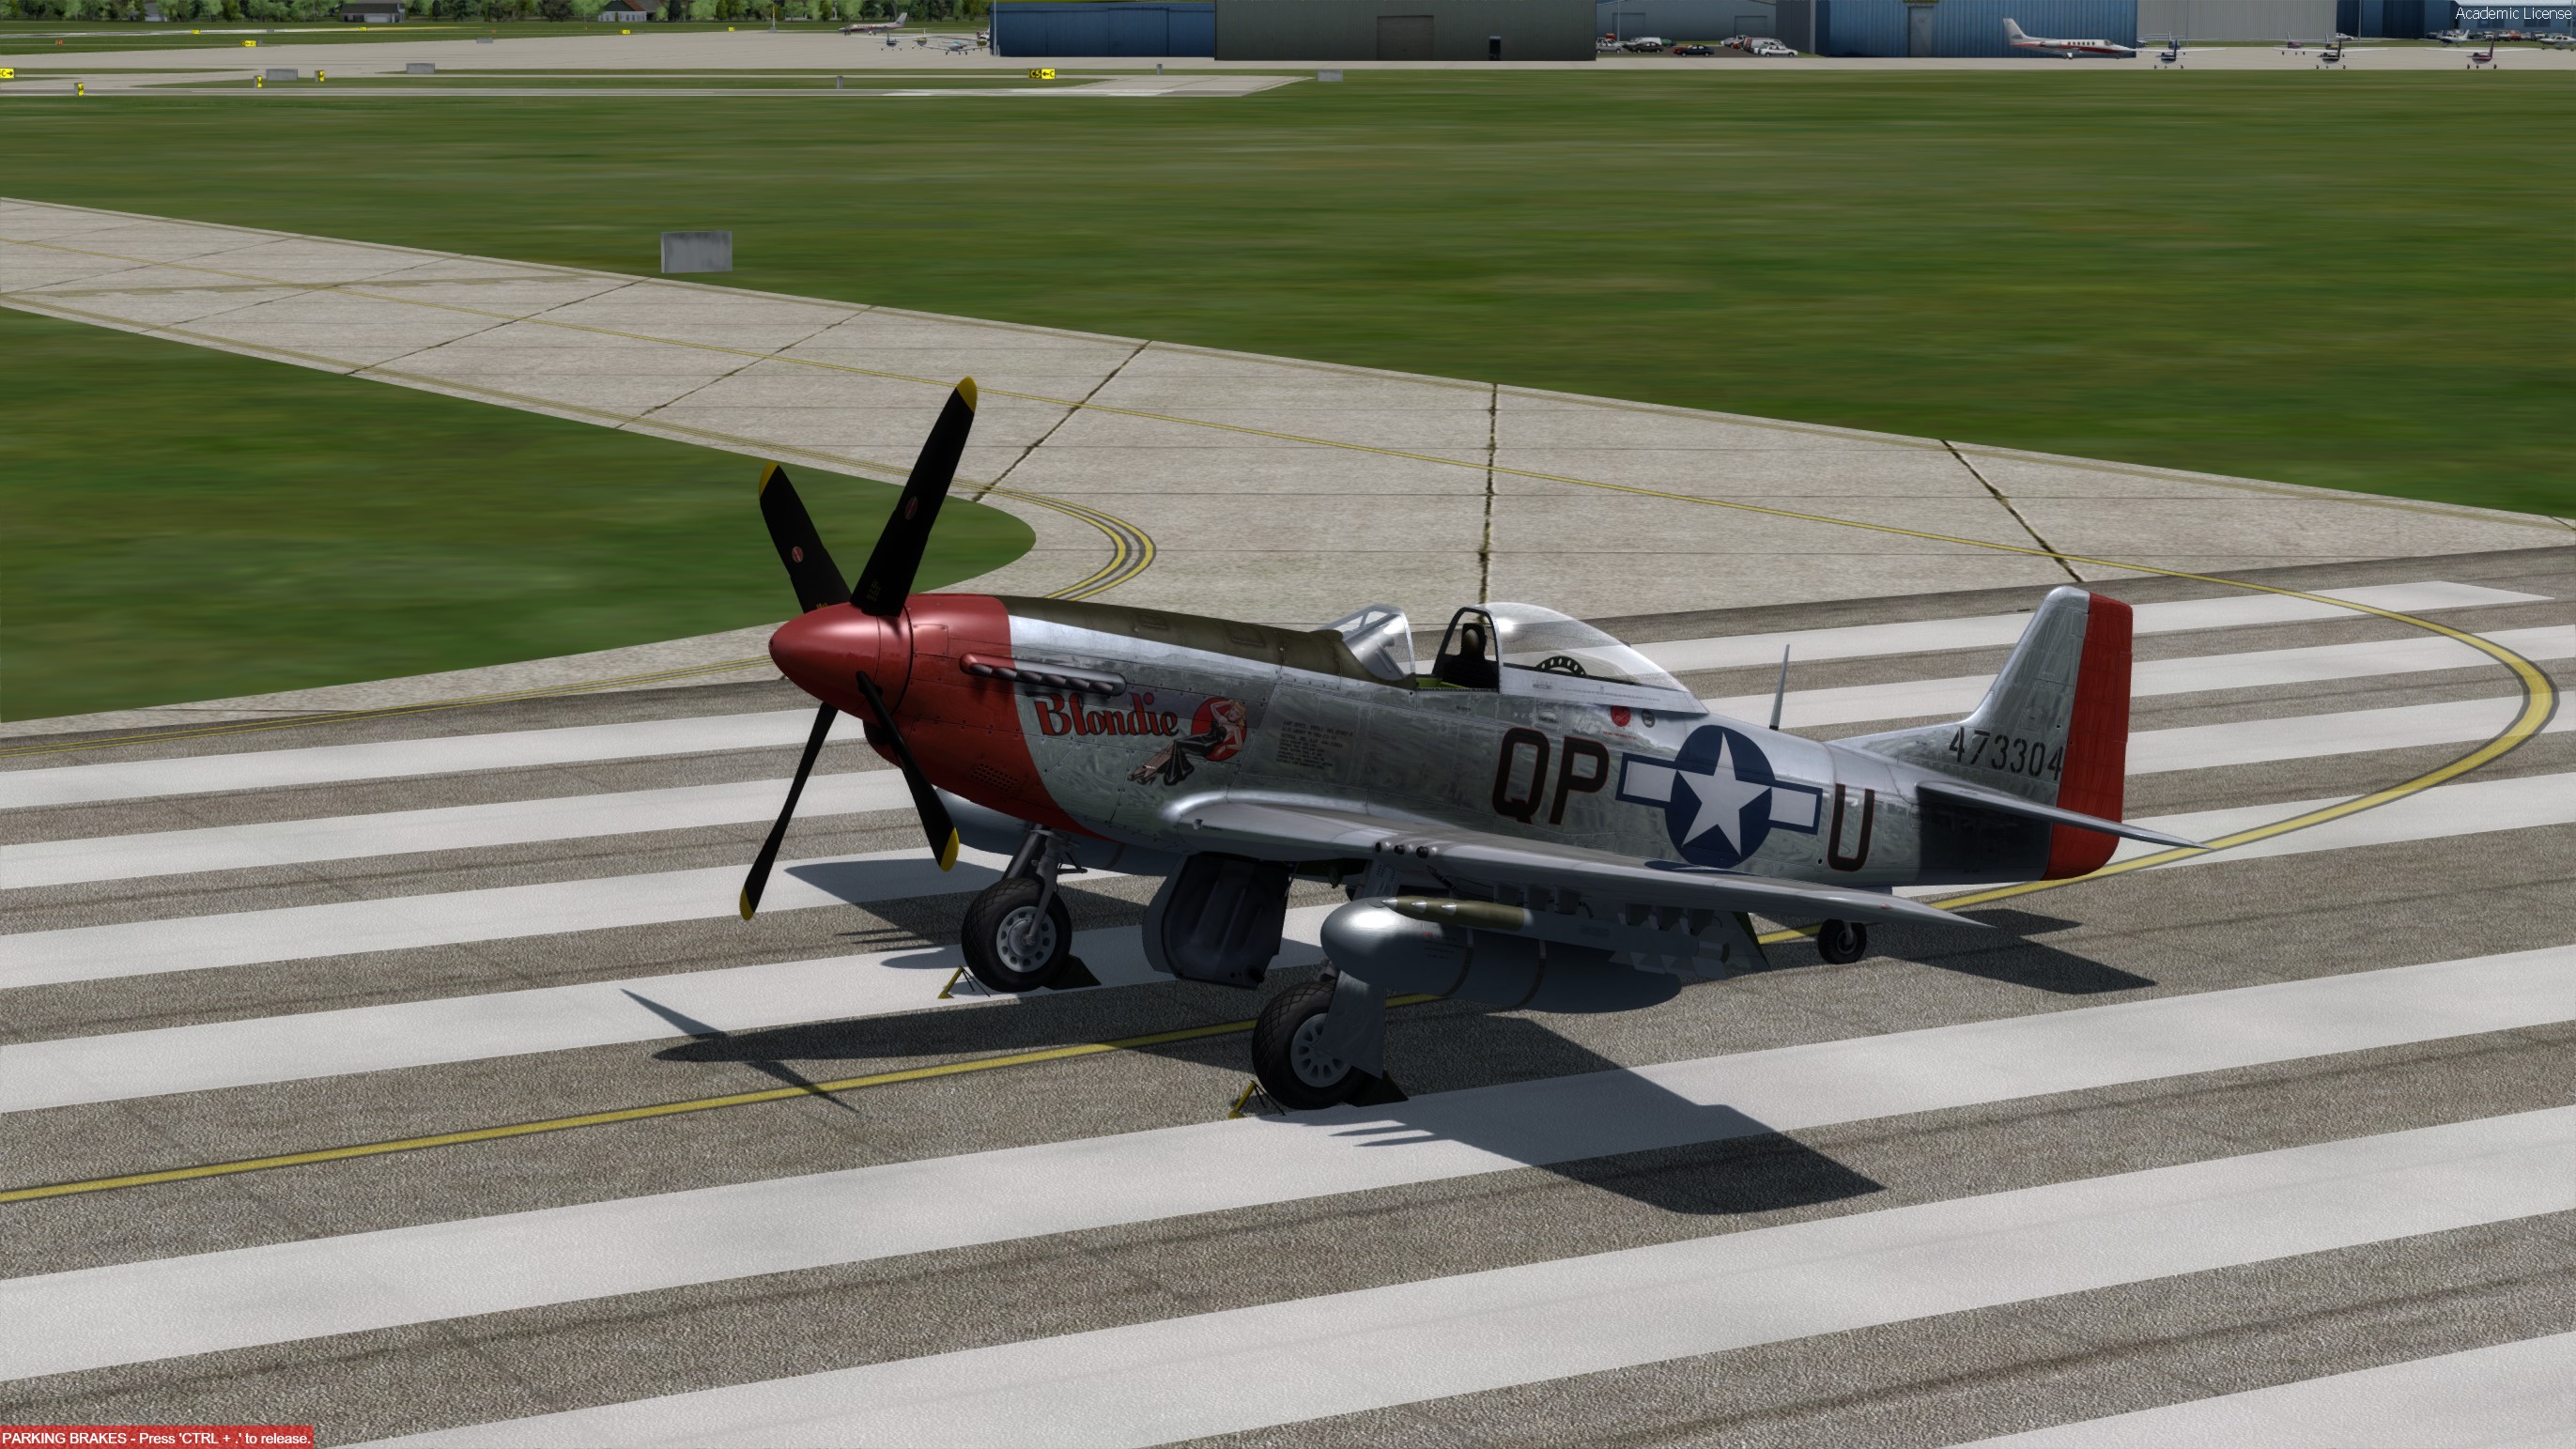 P-51 military